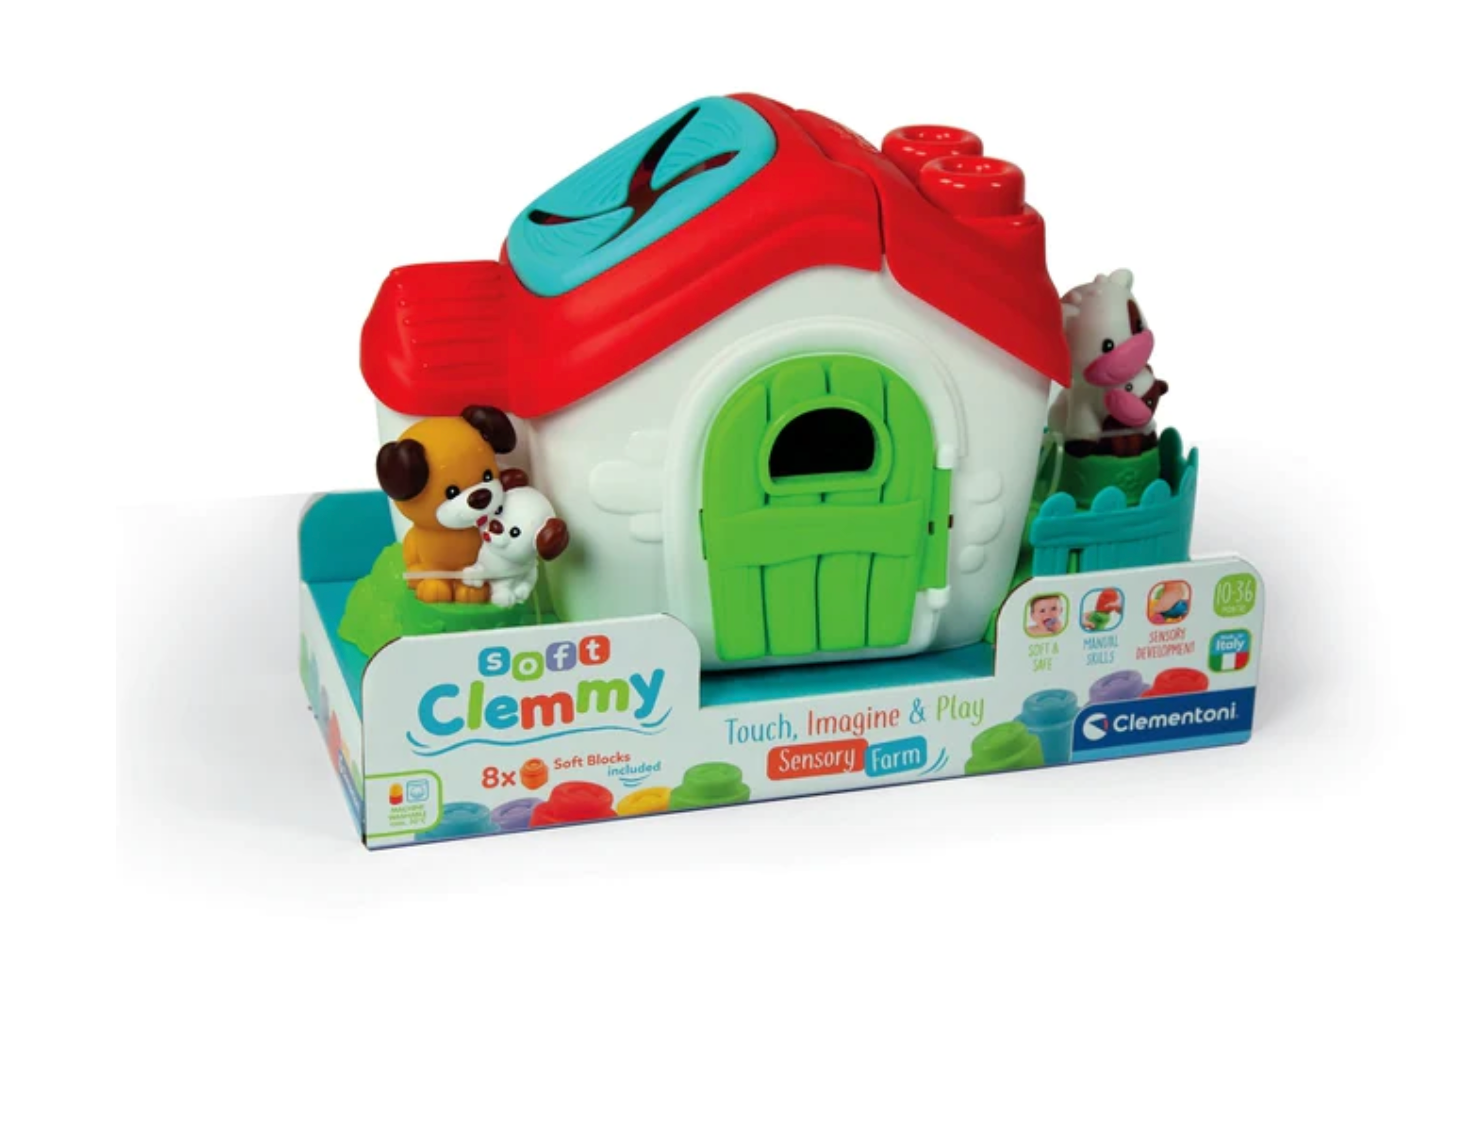 Clementoni Touch, Imagine & Play Sensory Farm